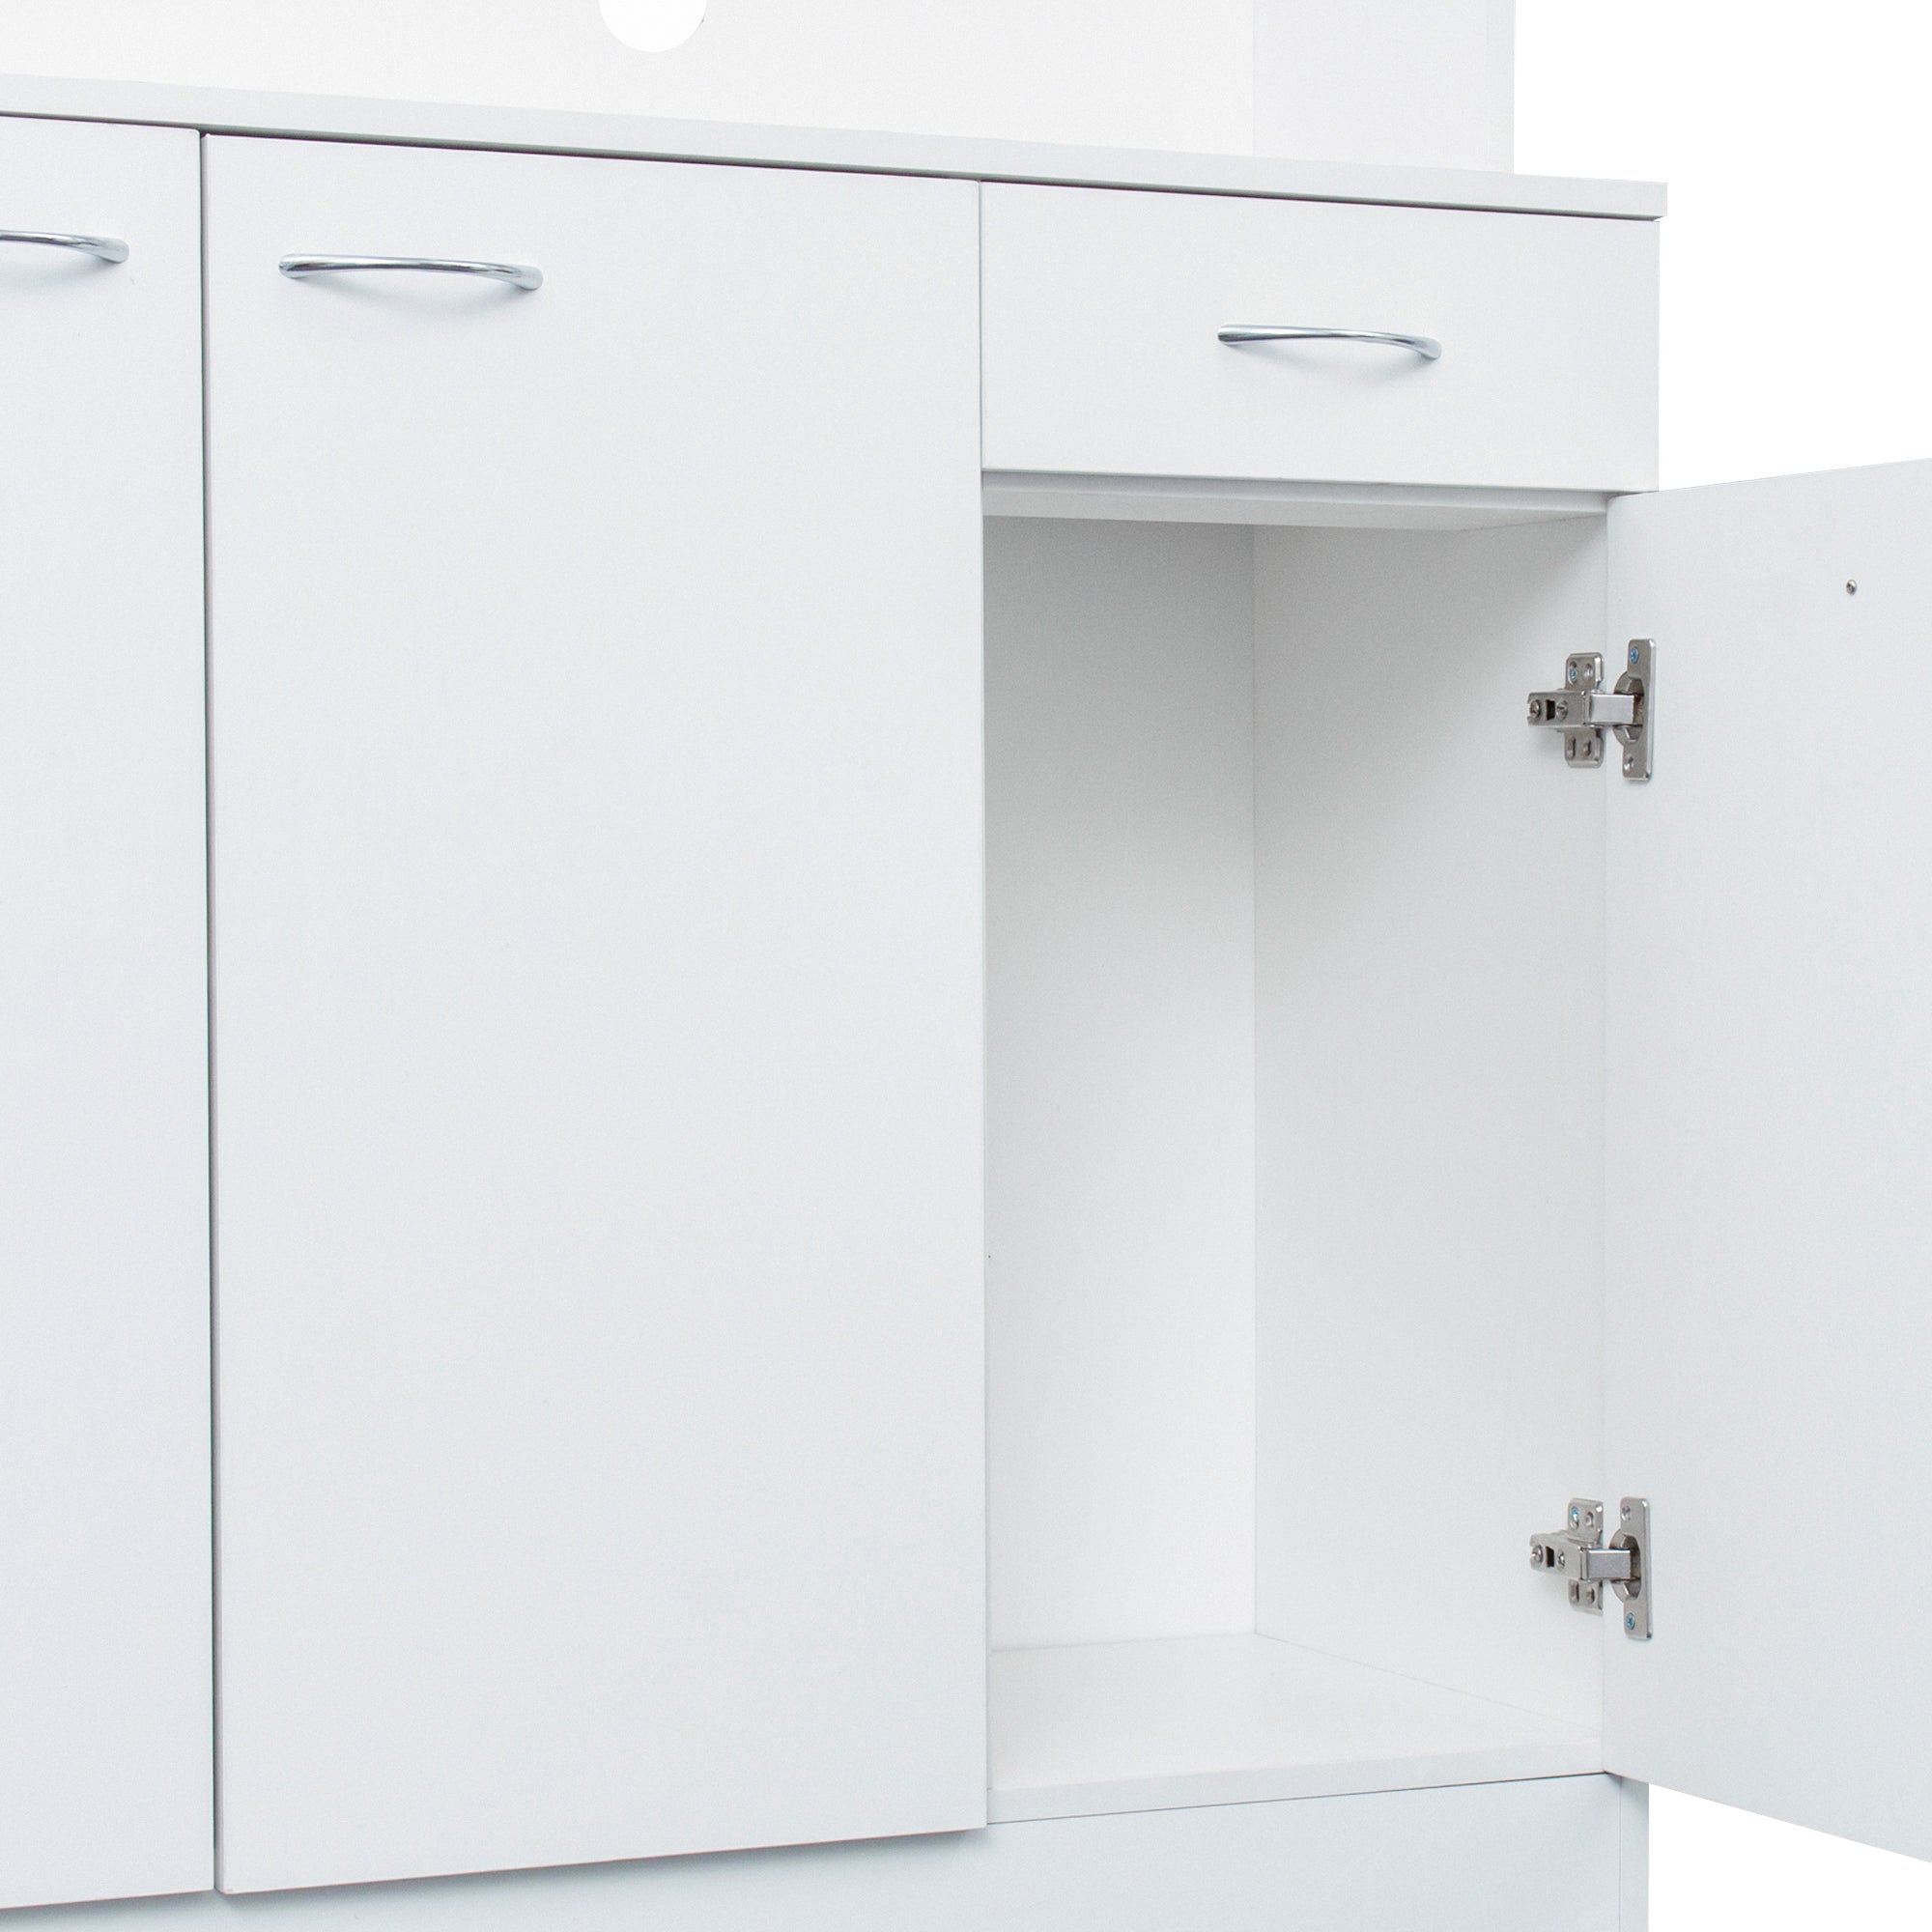 70.87" Tall White Storage Organize Cabinet, Pantry Cabinet, Garage Cabinet